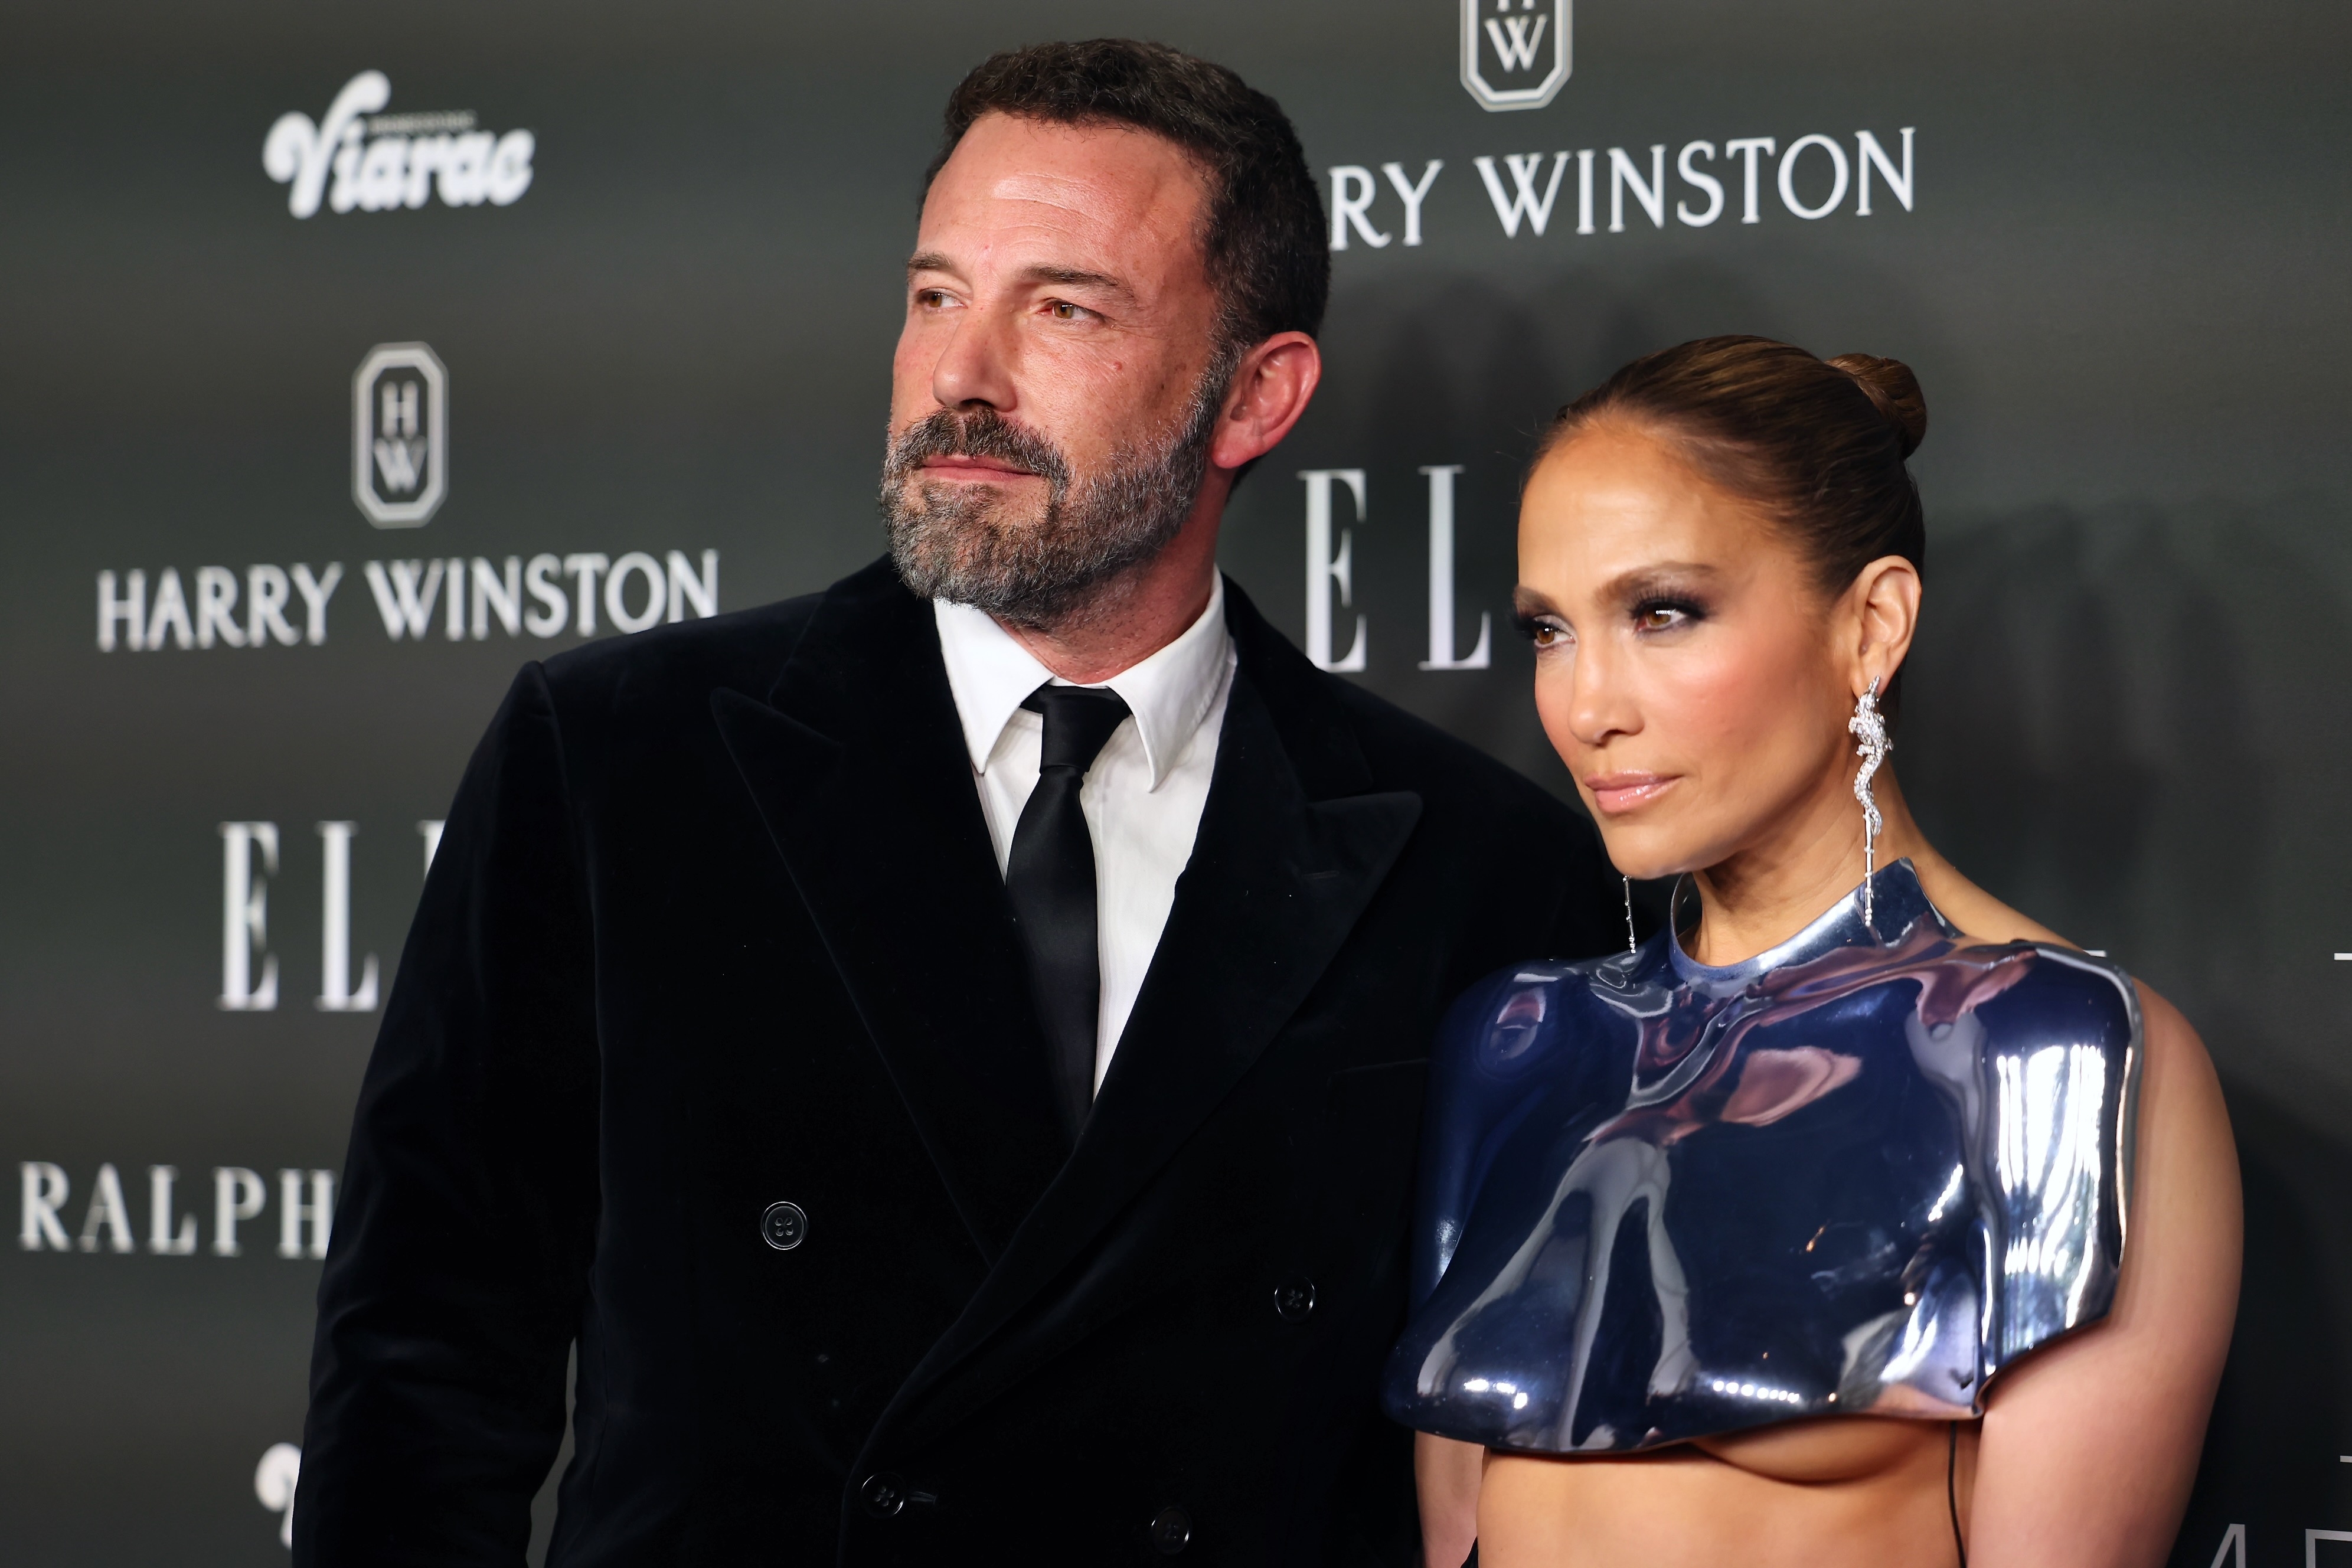 Ben Affleck and Jennifer Lopez pose on the red carpet. Ben wears a black velvet suit and tie; Jennifer wears a futuristic, metallic top with a sleek high bun